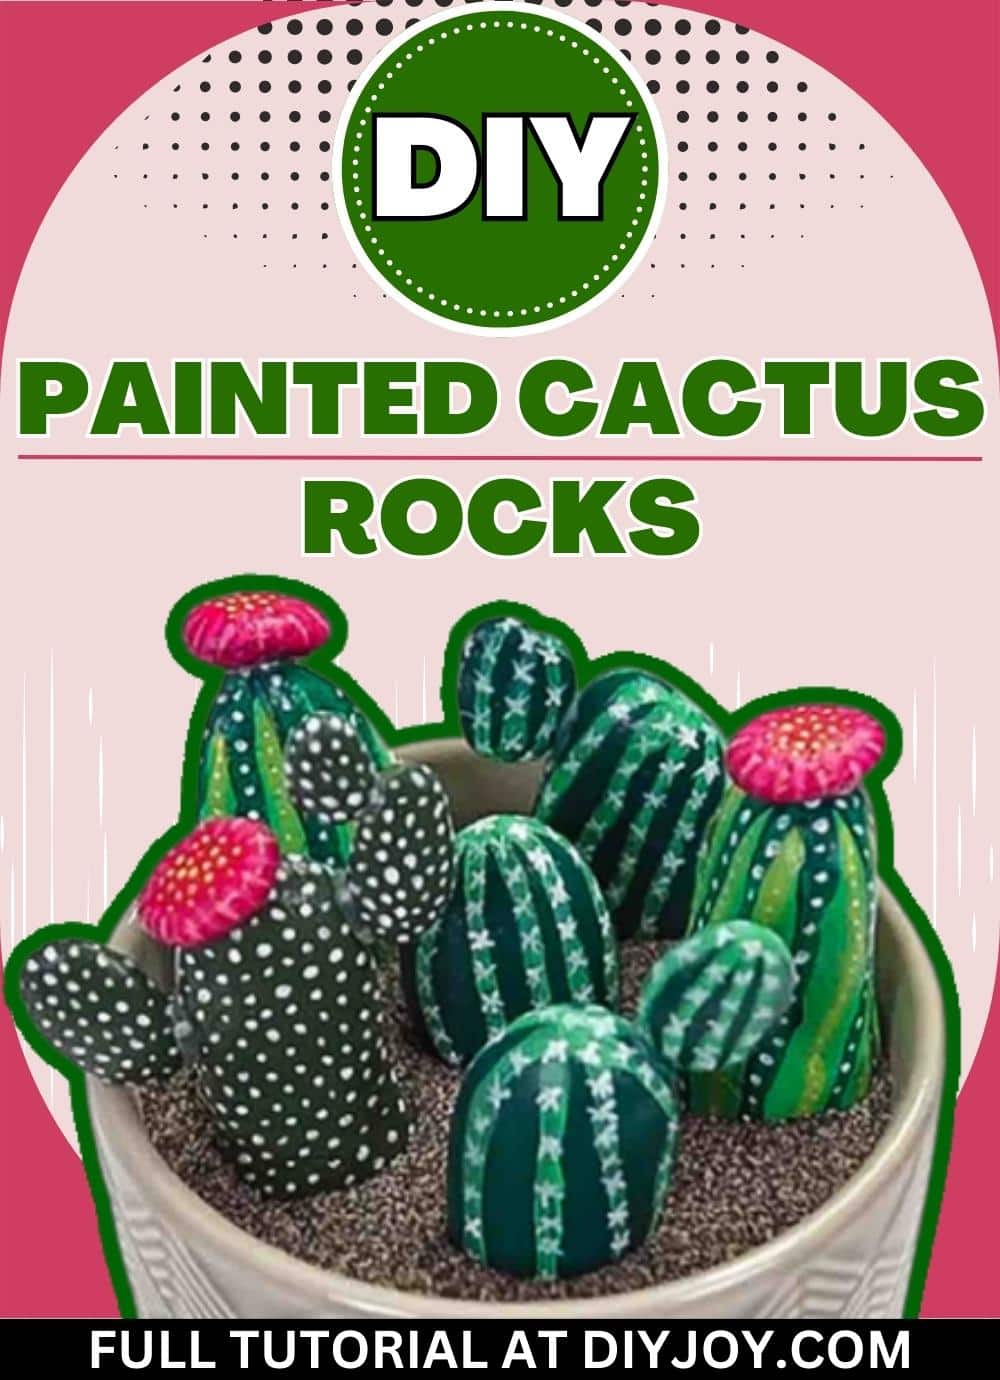 DIY Painted Cactus Rocks Tutorial